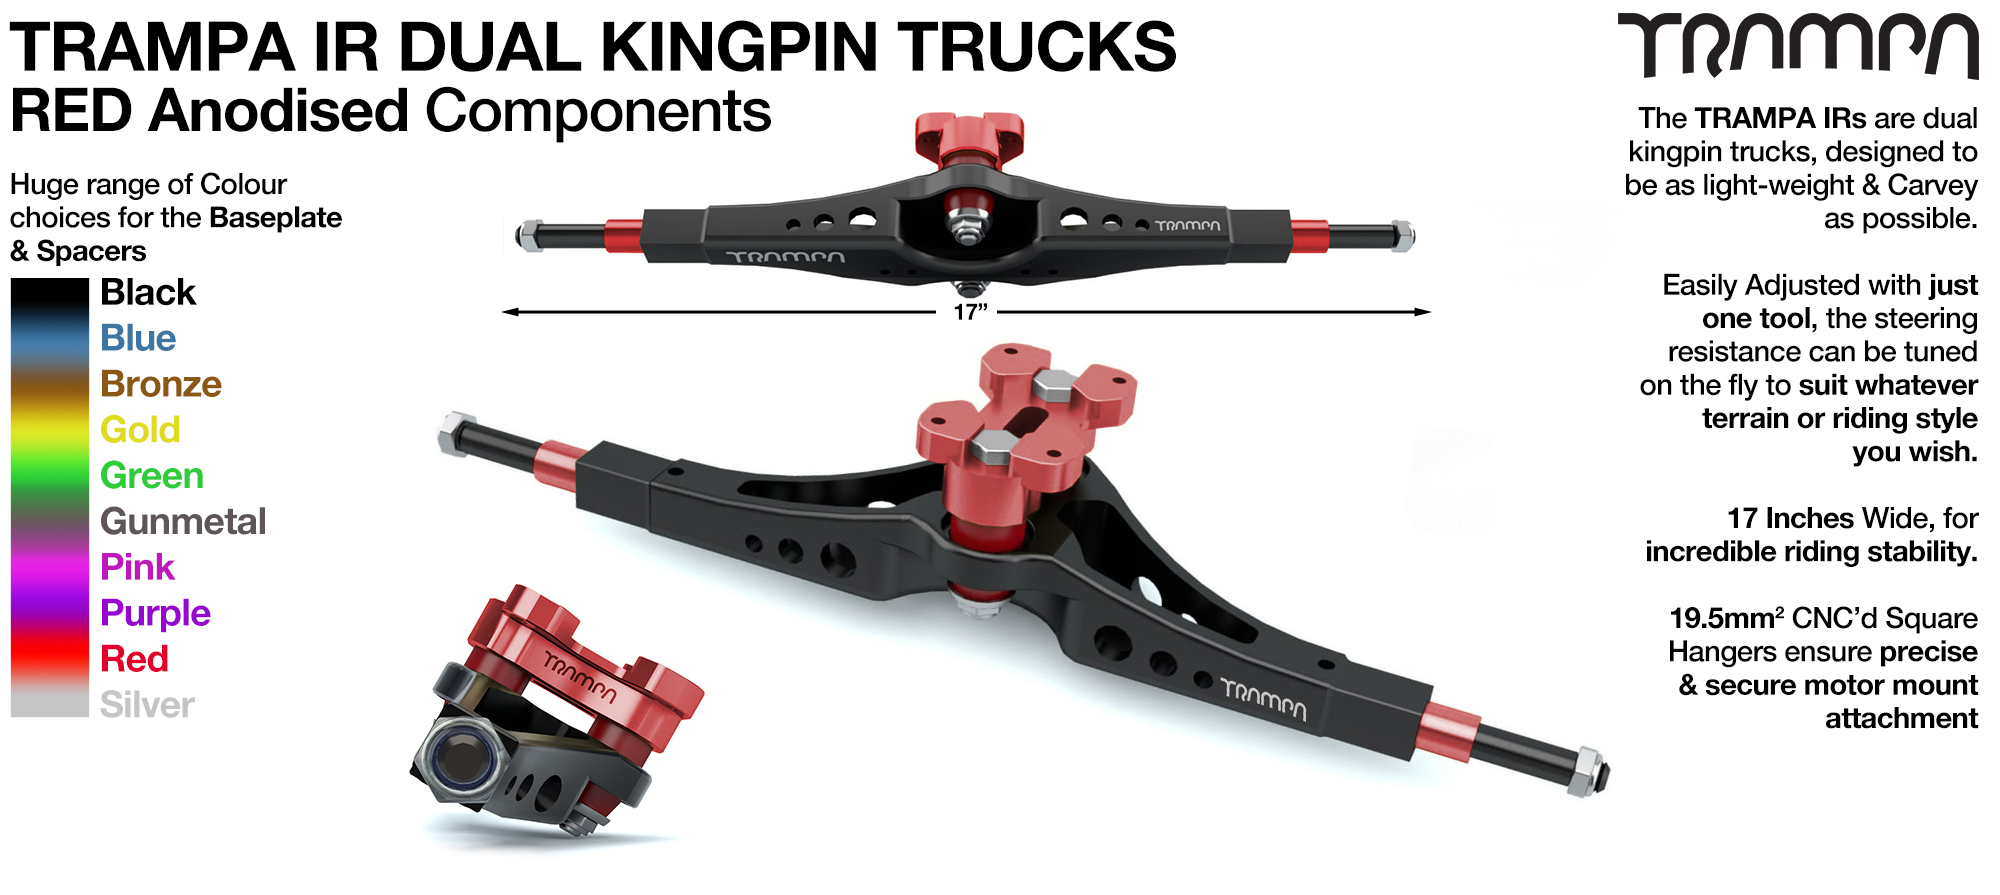 TRAMPA IR Double Kingpinned Skate Style Trucks fit every 19.1mm Motor Mount TRAMPA offers - RED